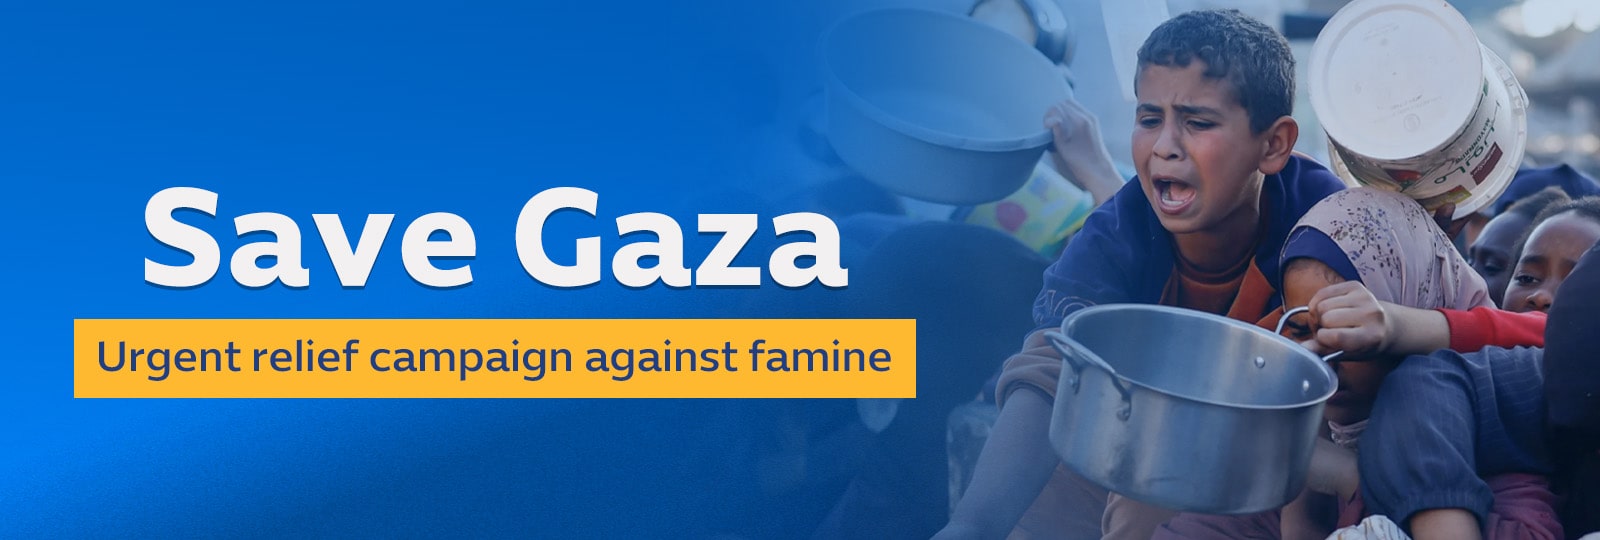 gaza famine